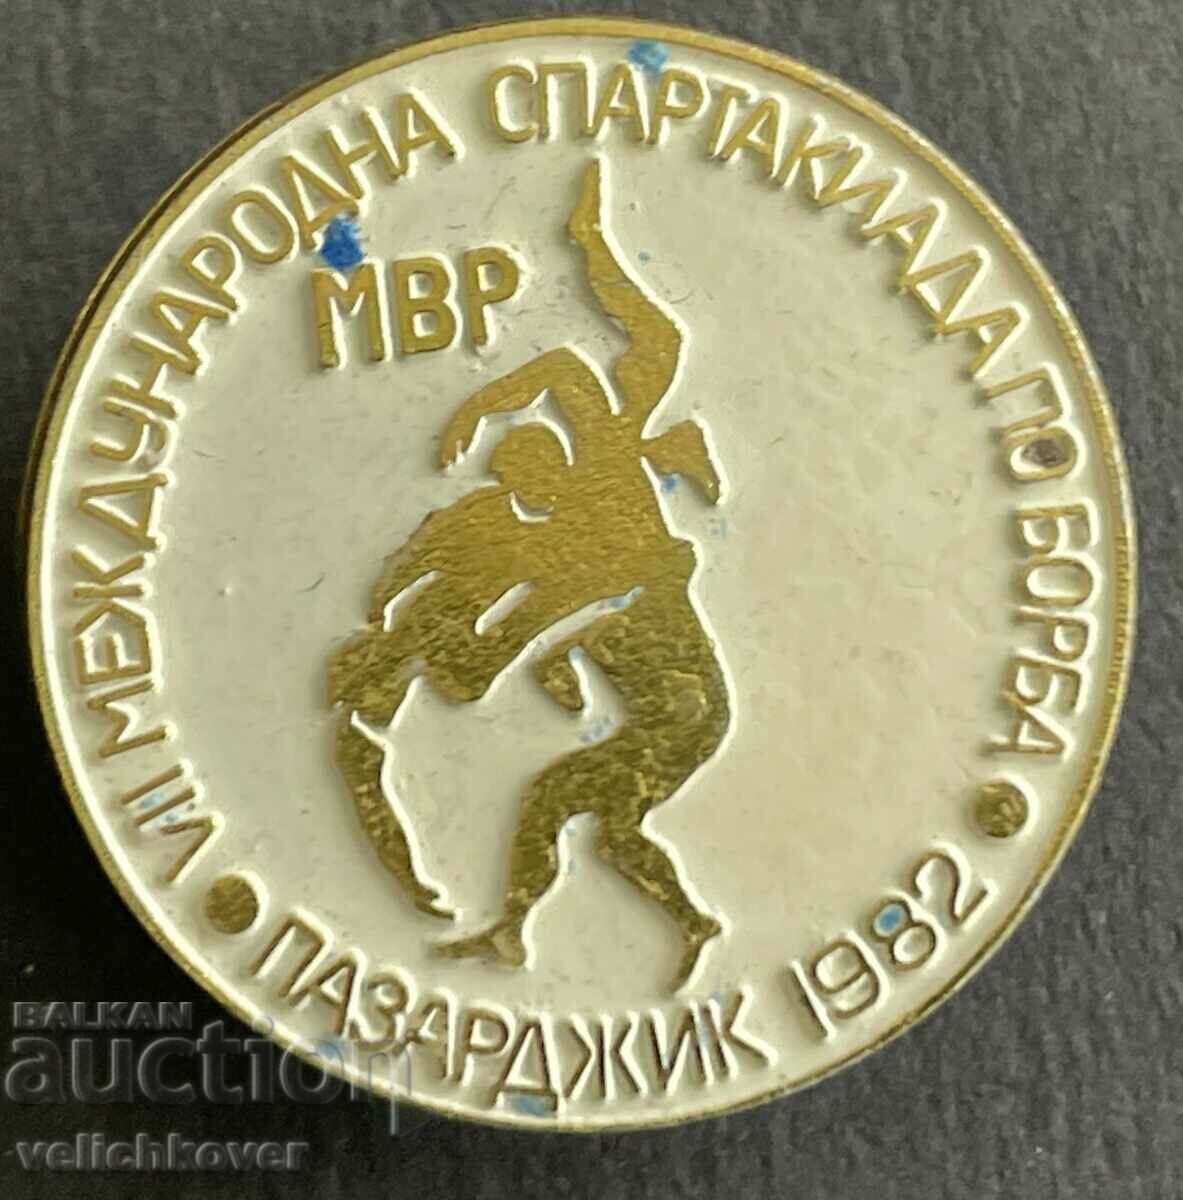 37600 България знак спартакяда МВР Борба Пазарджик 1982г.